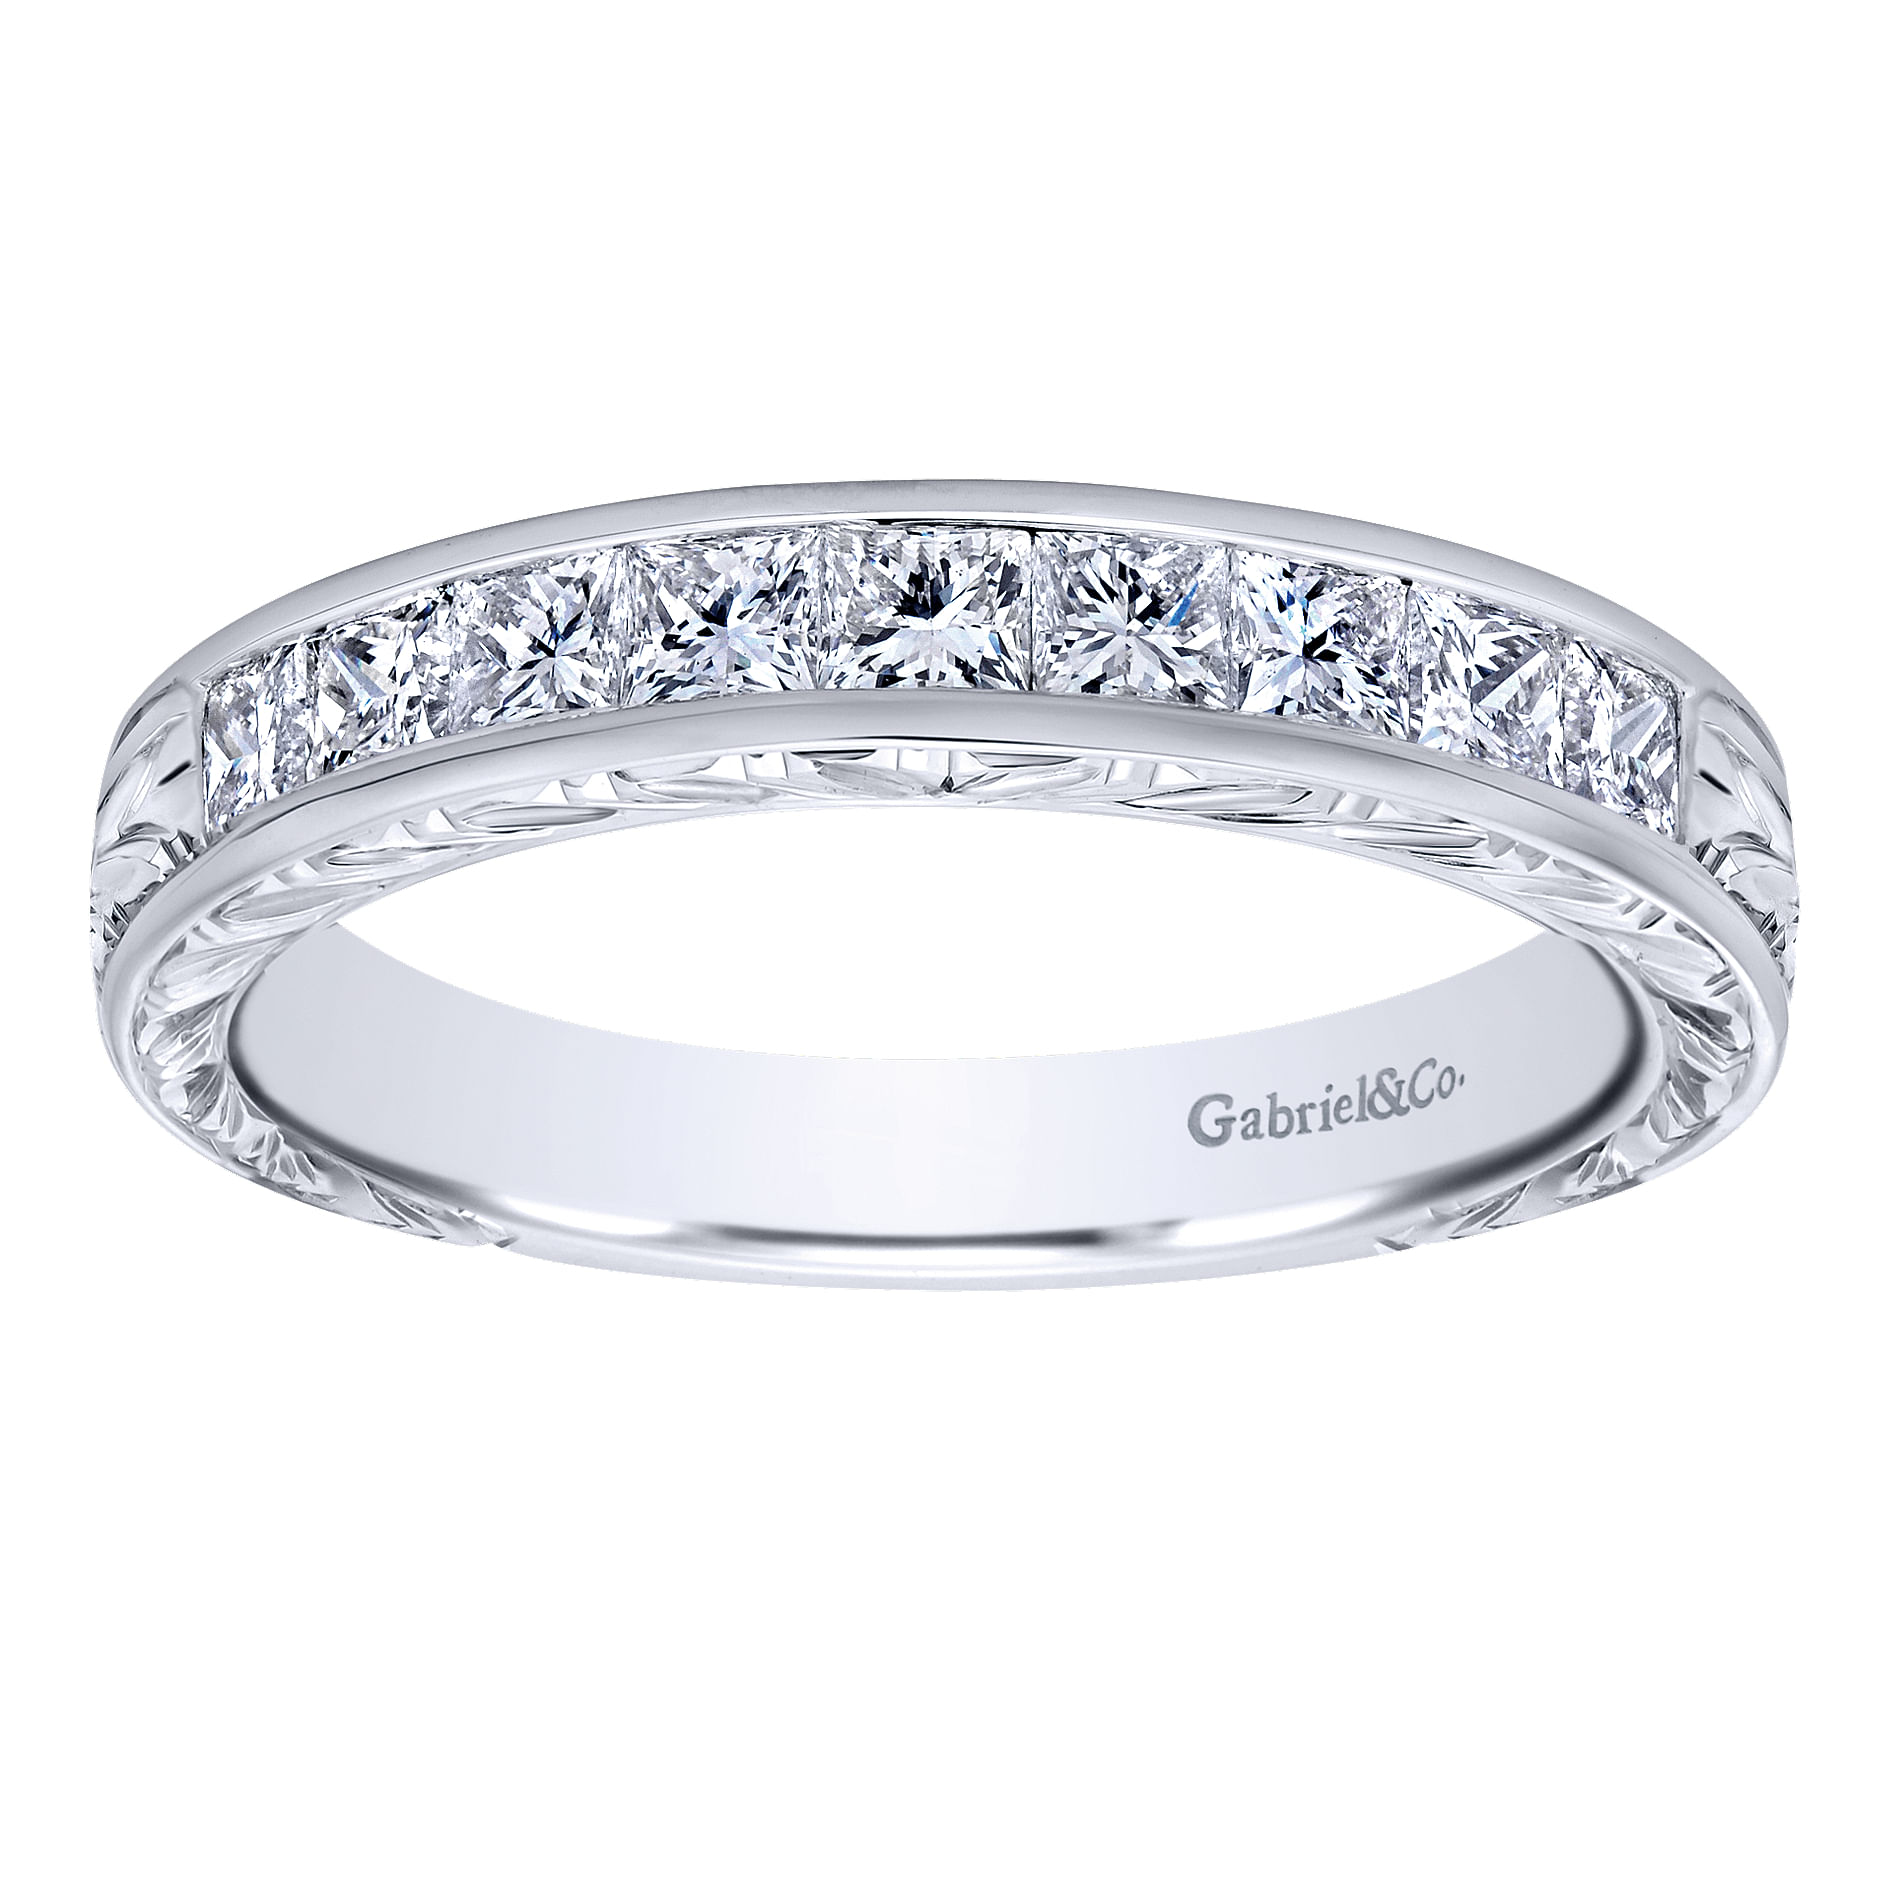 14K White Gold Princess Cut 9 Stone Channel Set Diamond Wedding Band with Engraving